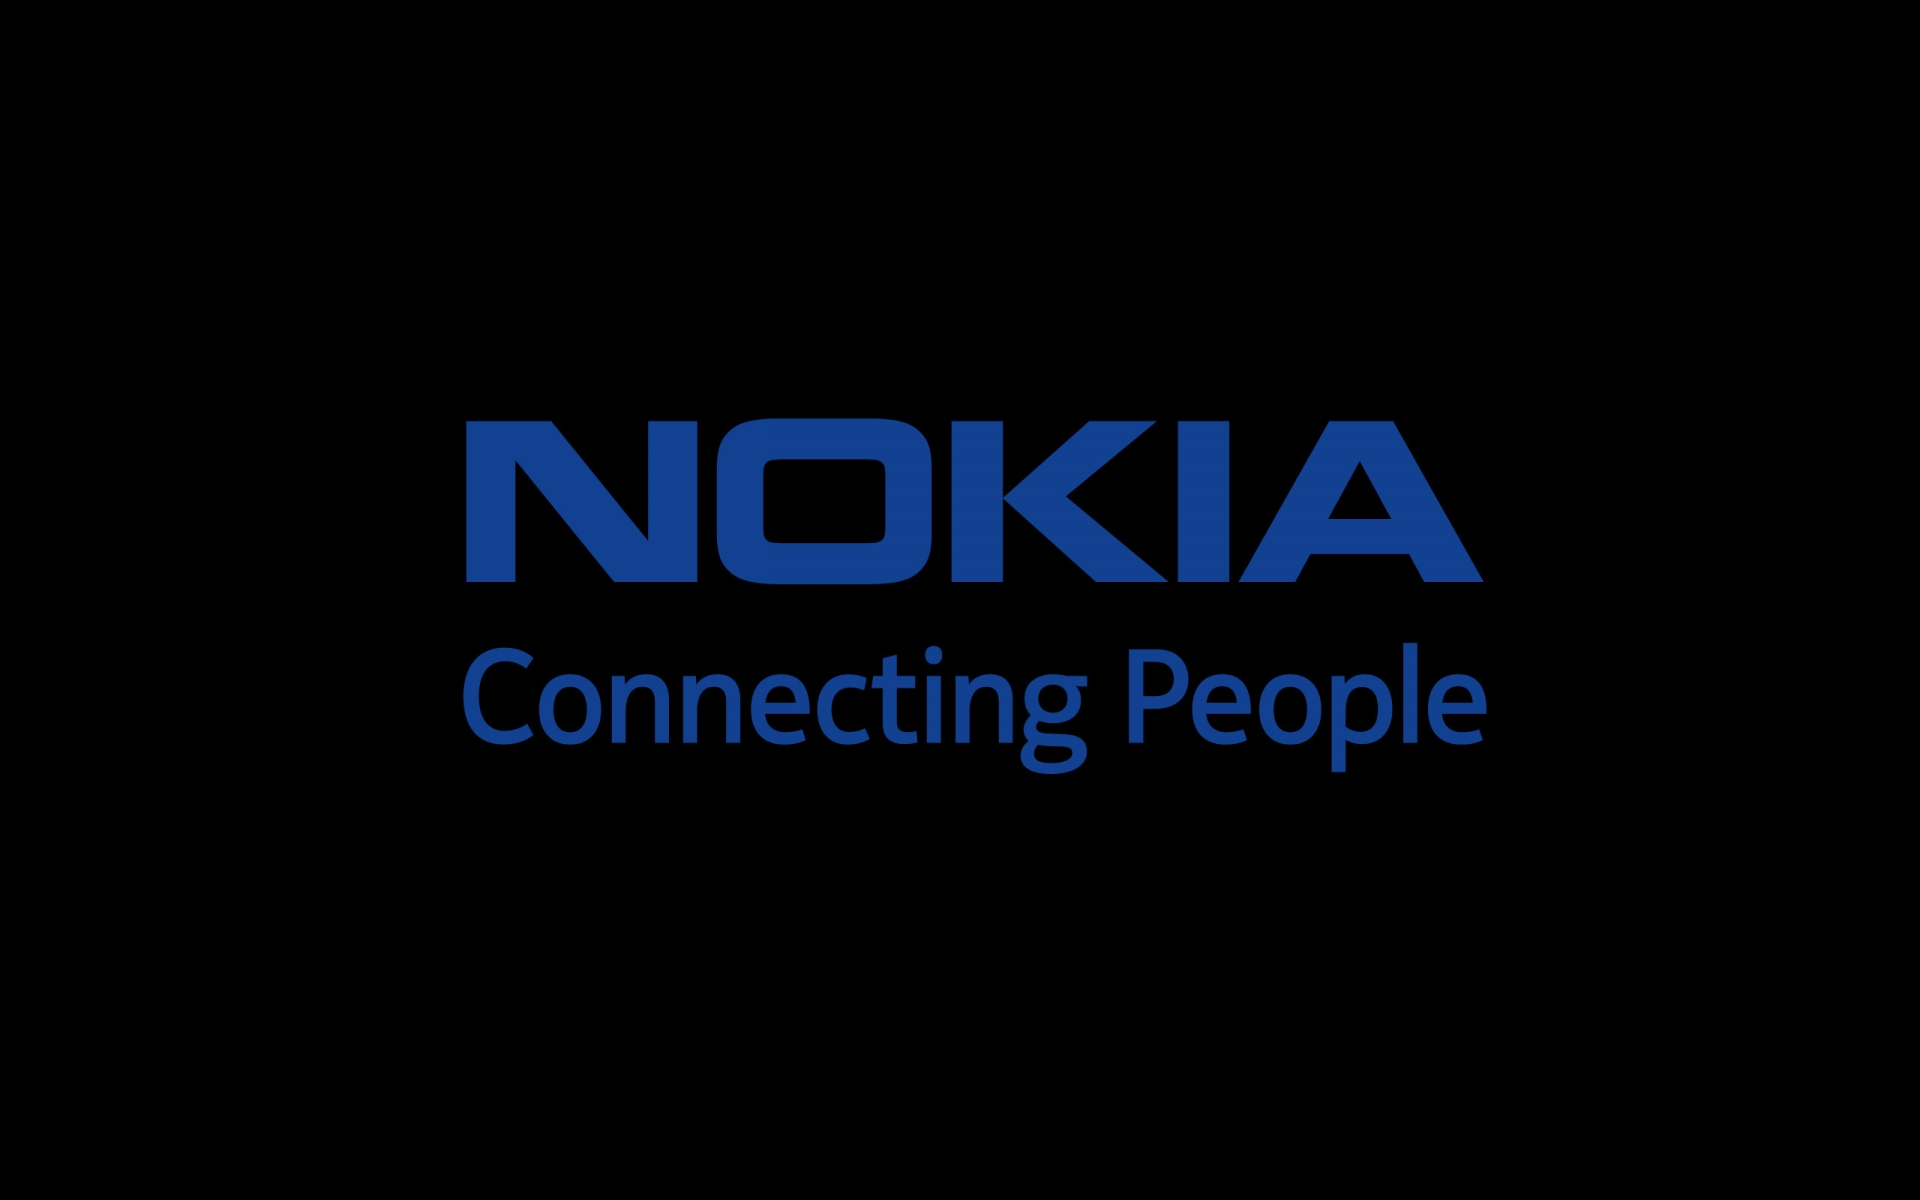 Nokia for 1920 x 1200 widescreen resolution